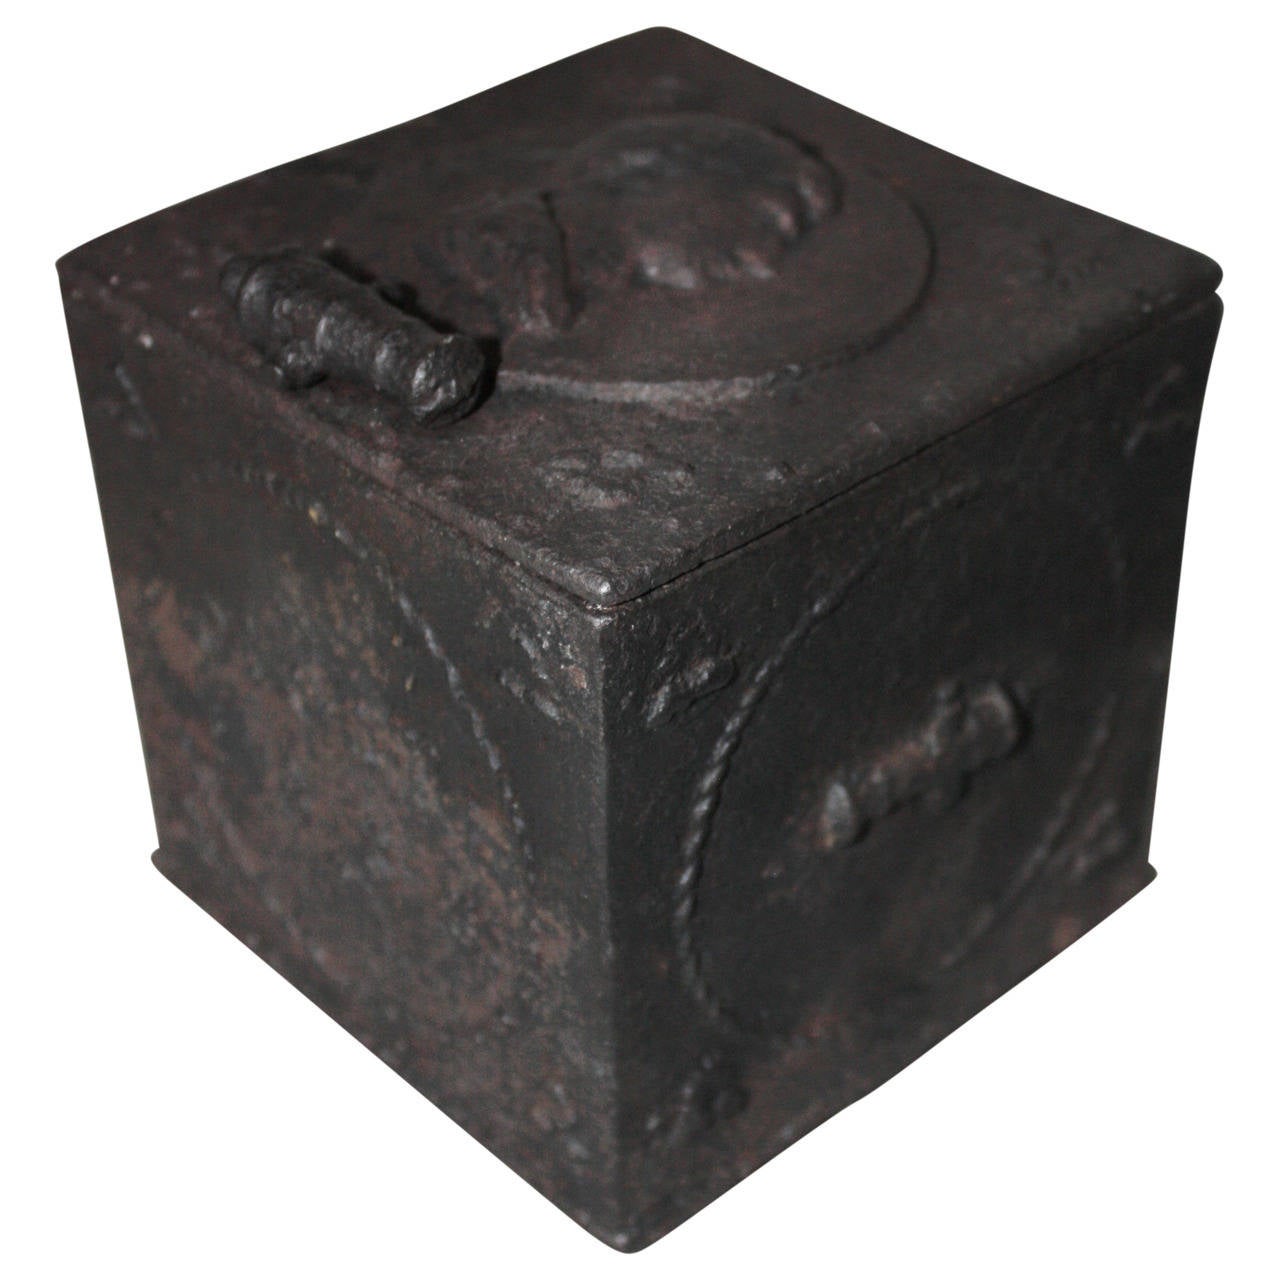 Fantastic decorative cast iron gunpowder box from 1833.